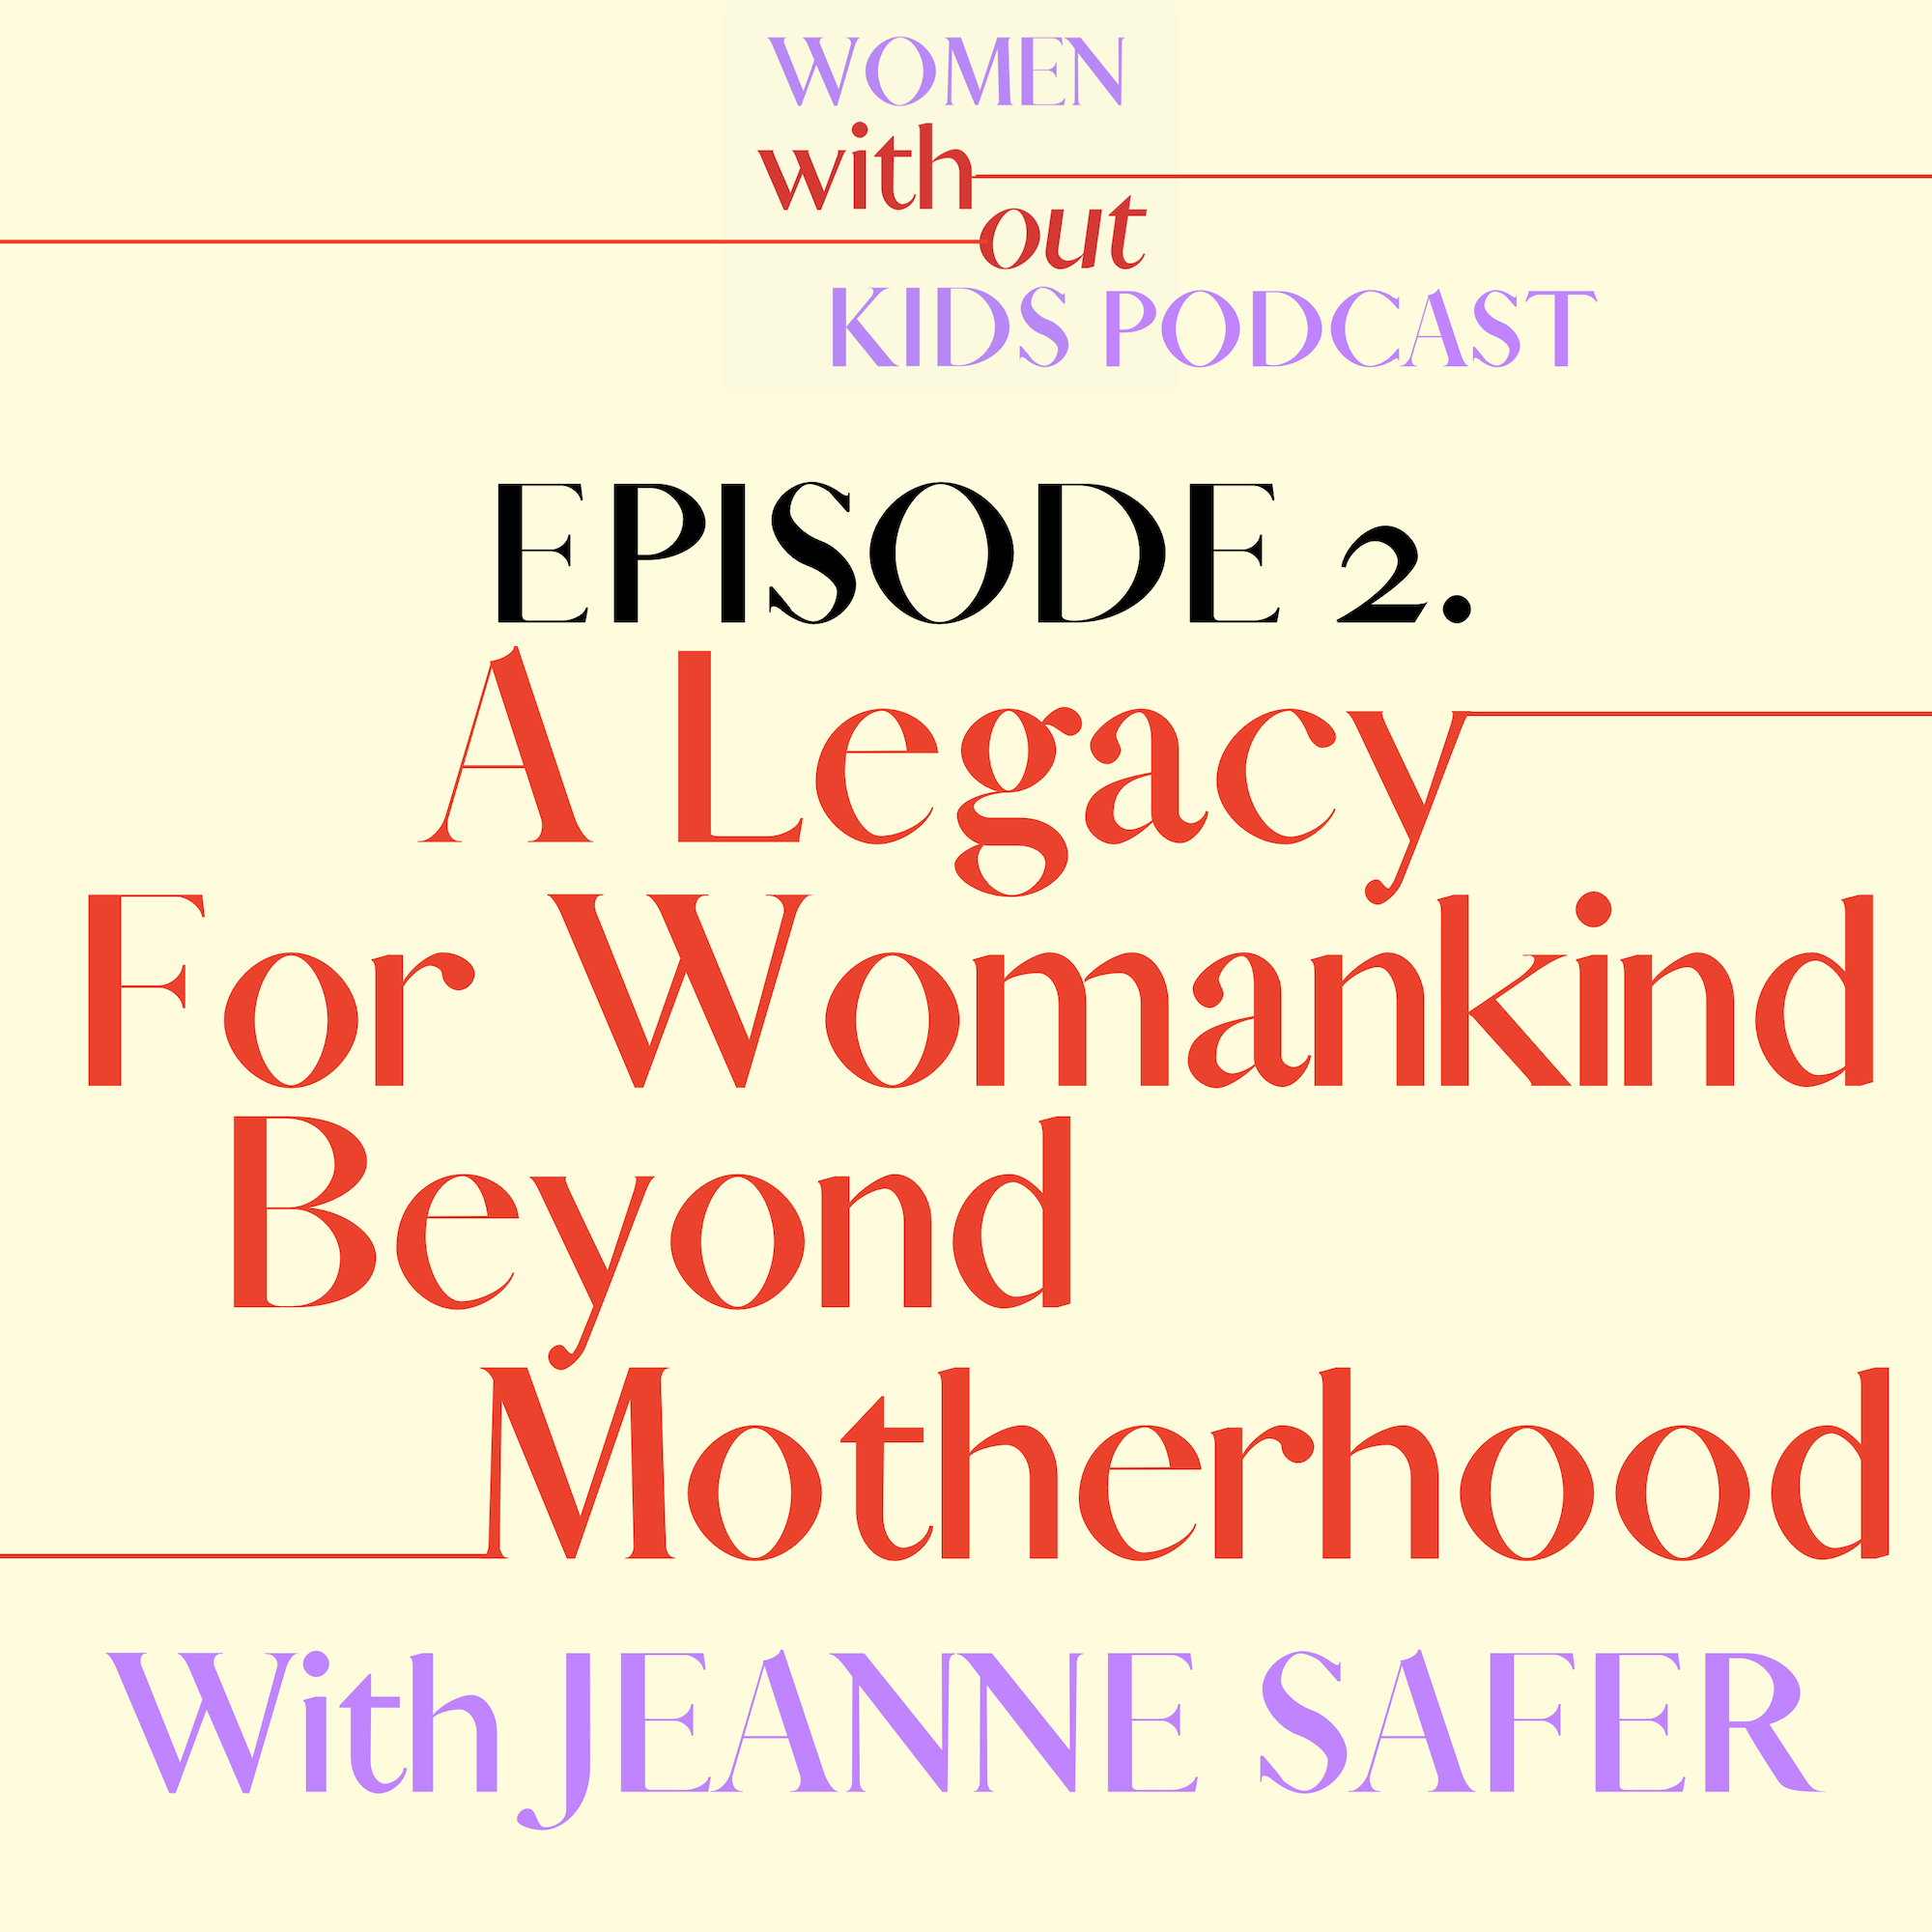 Jeanne Safer women without kids podcast ruby warrington beyond motherhood